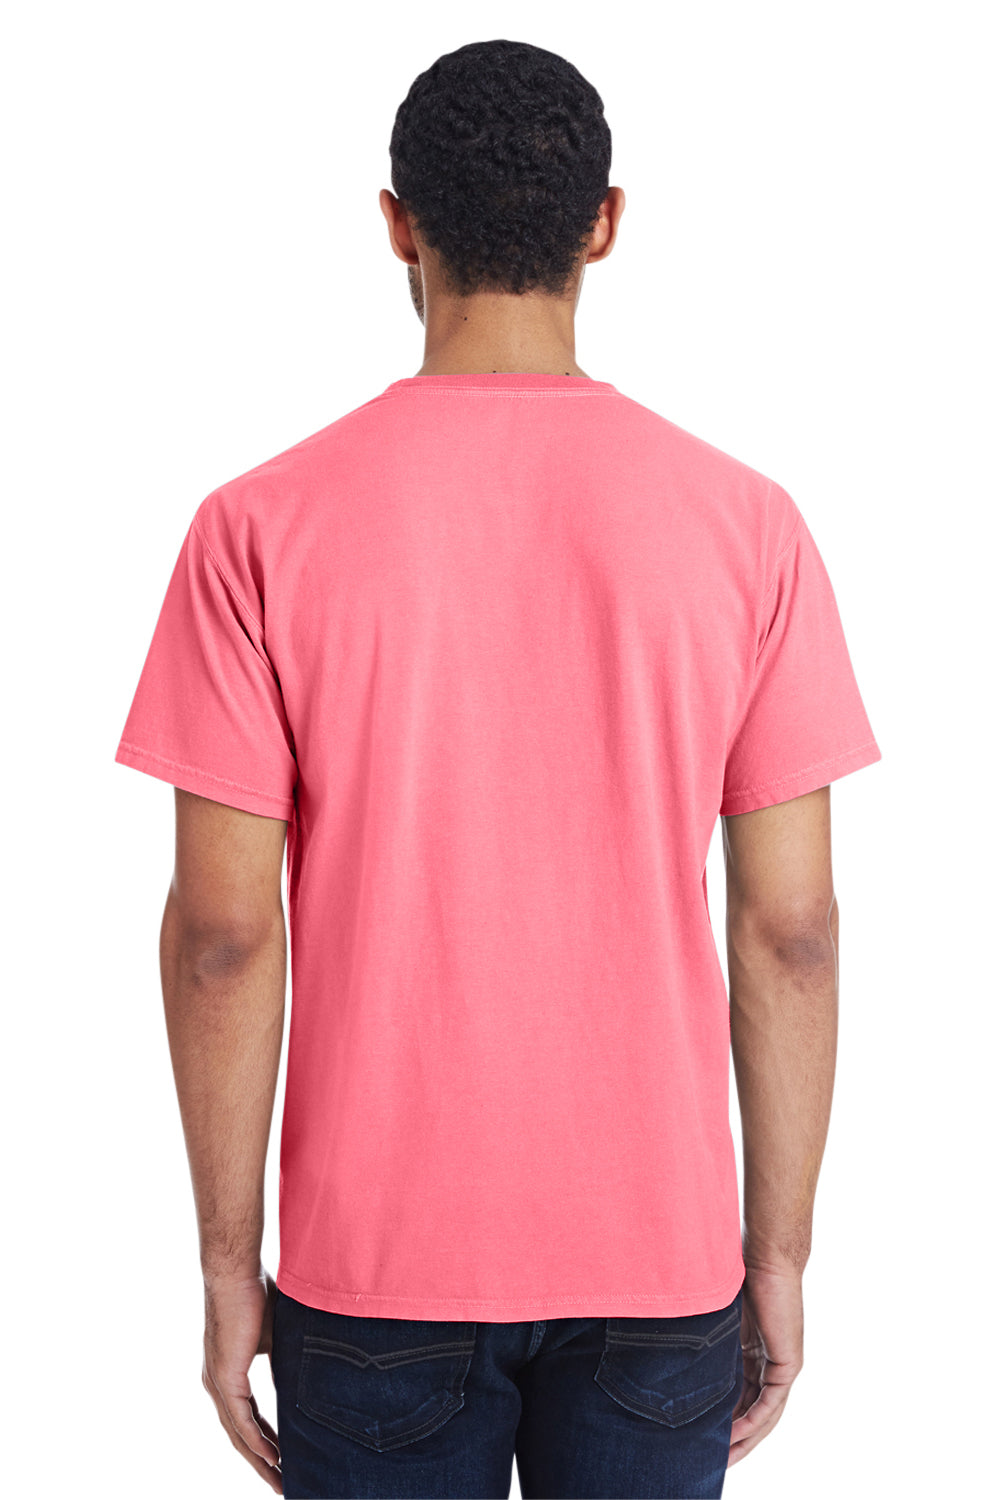 ComfortWash By Hanes GDH150 Mens Short Sleeve Crewneck T-Shirt w/ Pocket Coral Pink Back